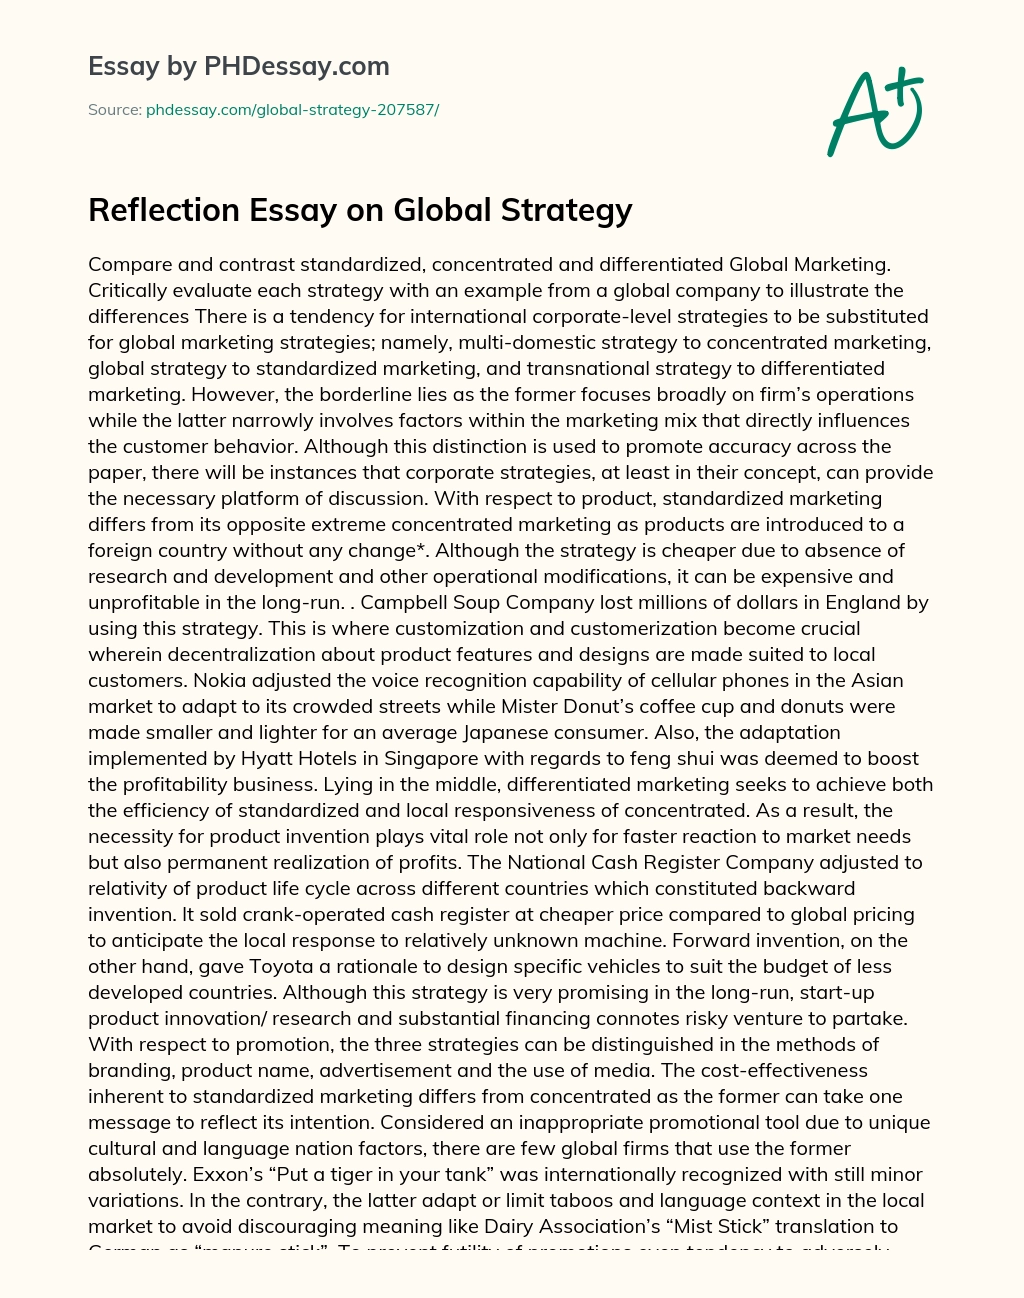 Reflection Essay on Global Strategy essay